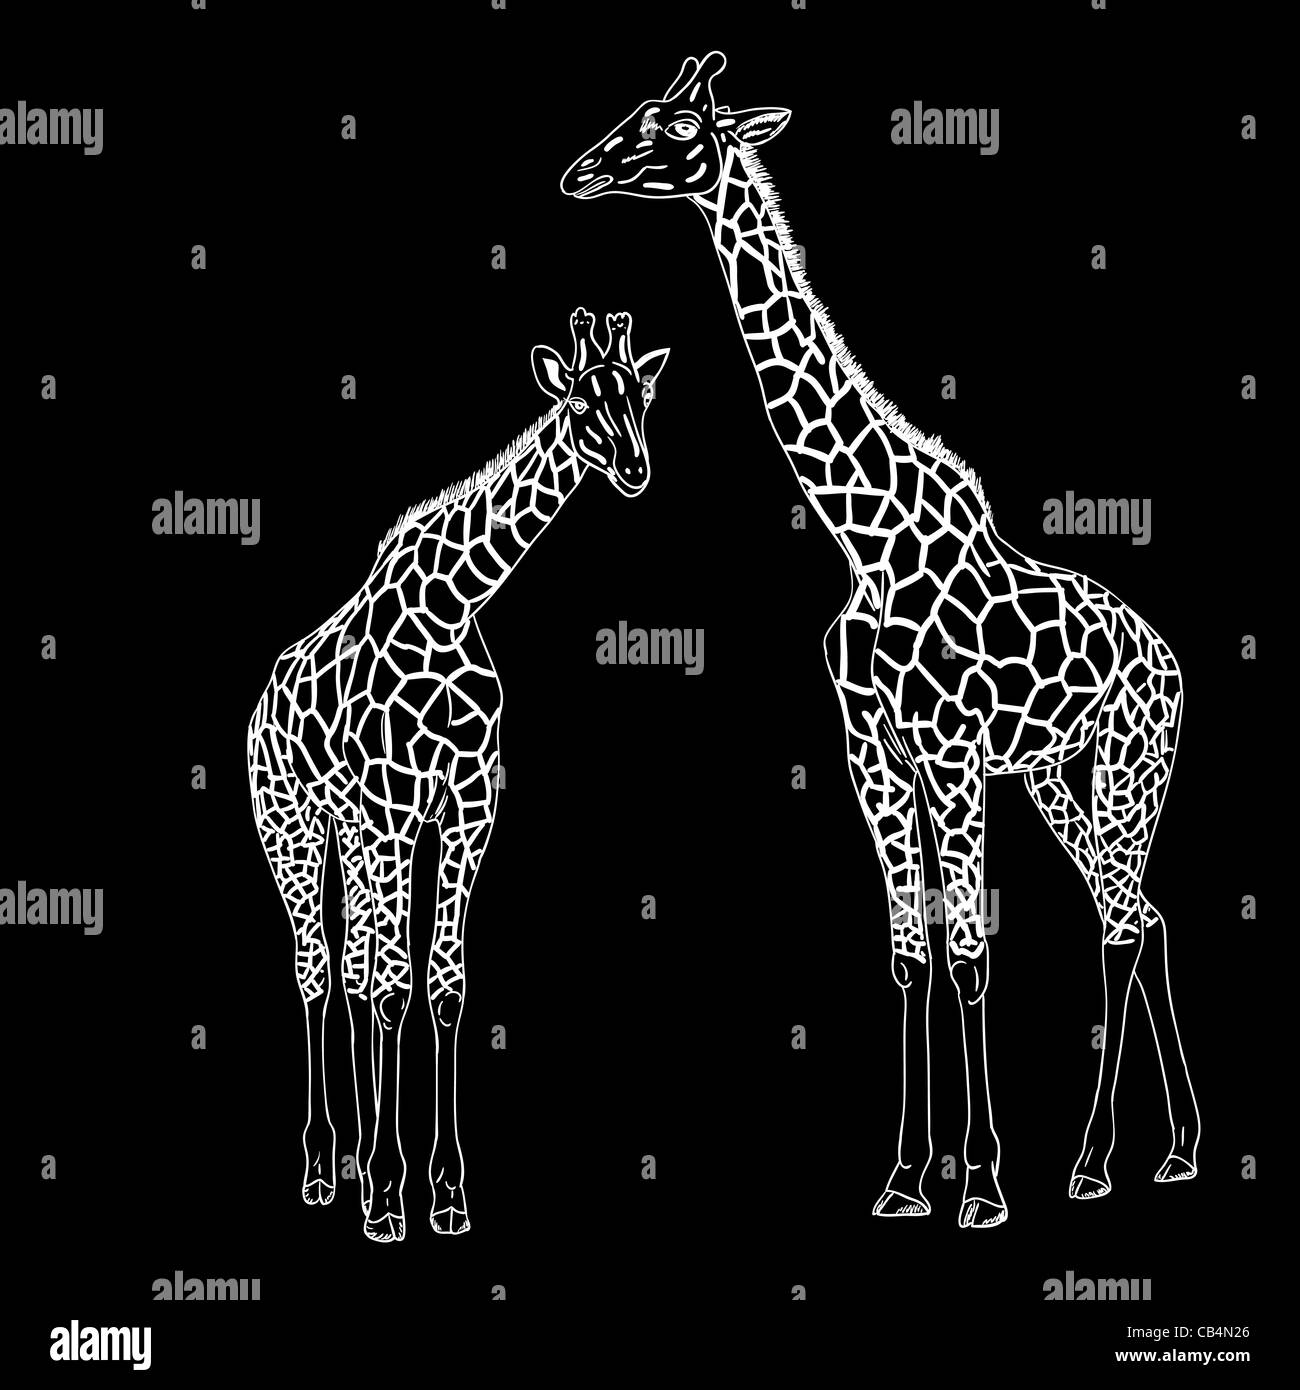 Two giraffes. Vector illustration. Stock Photo